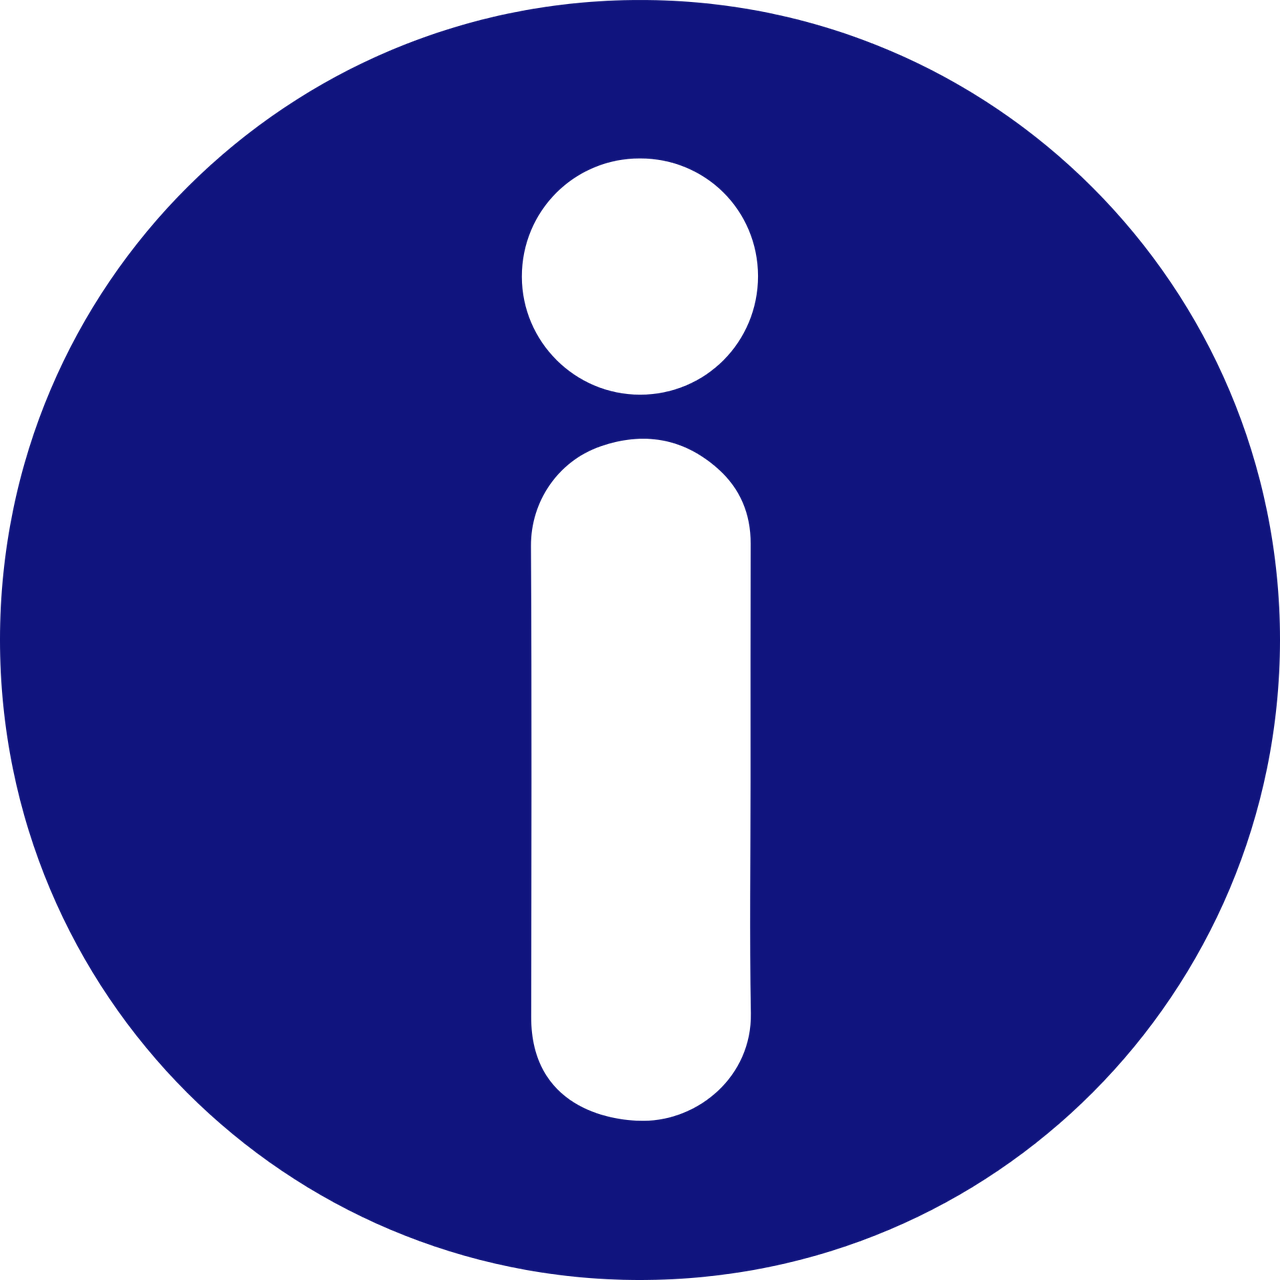 Blue information icon